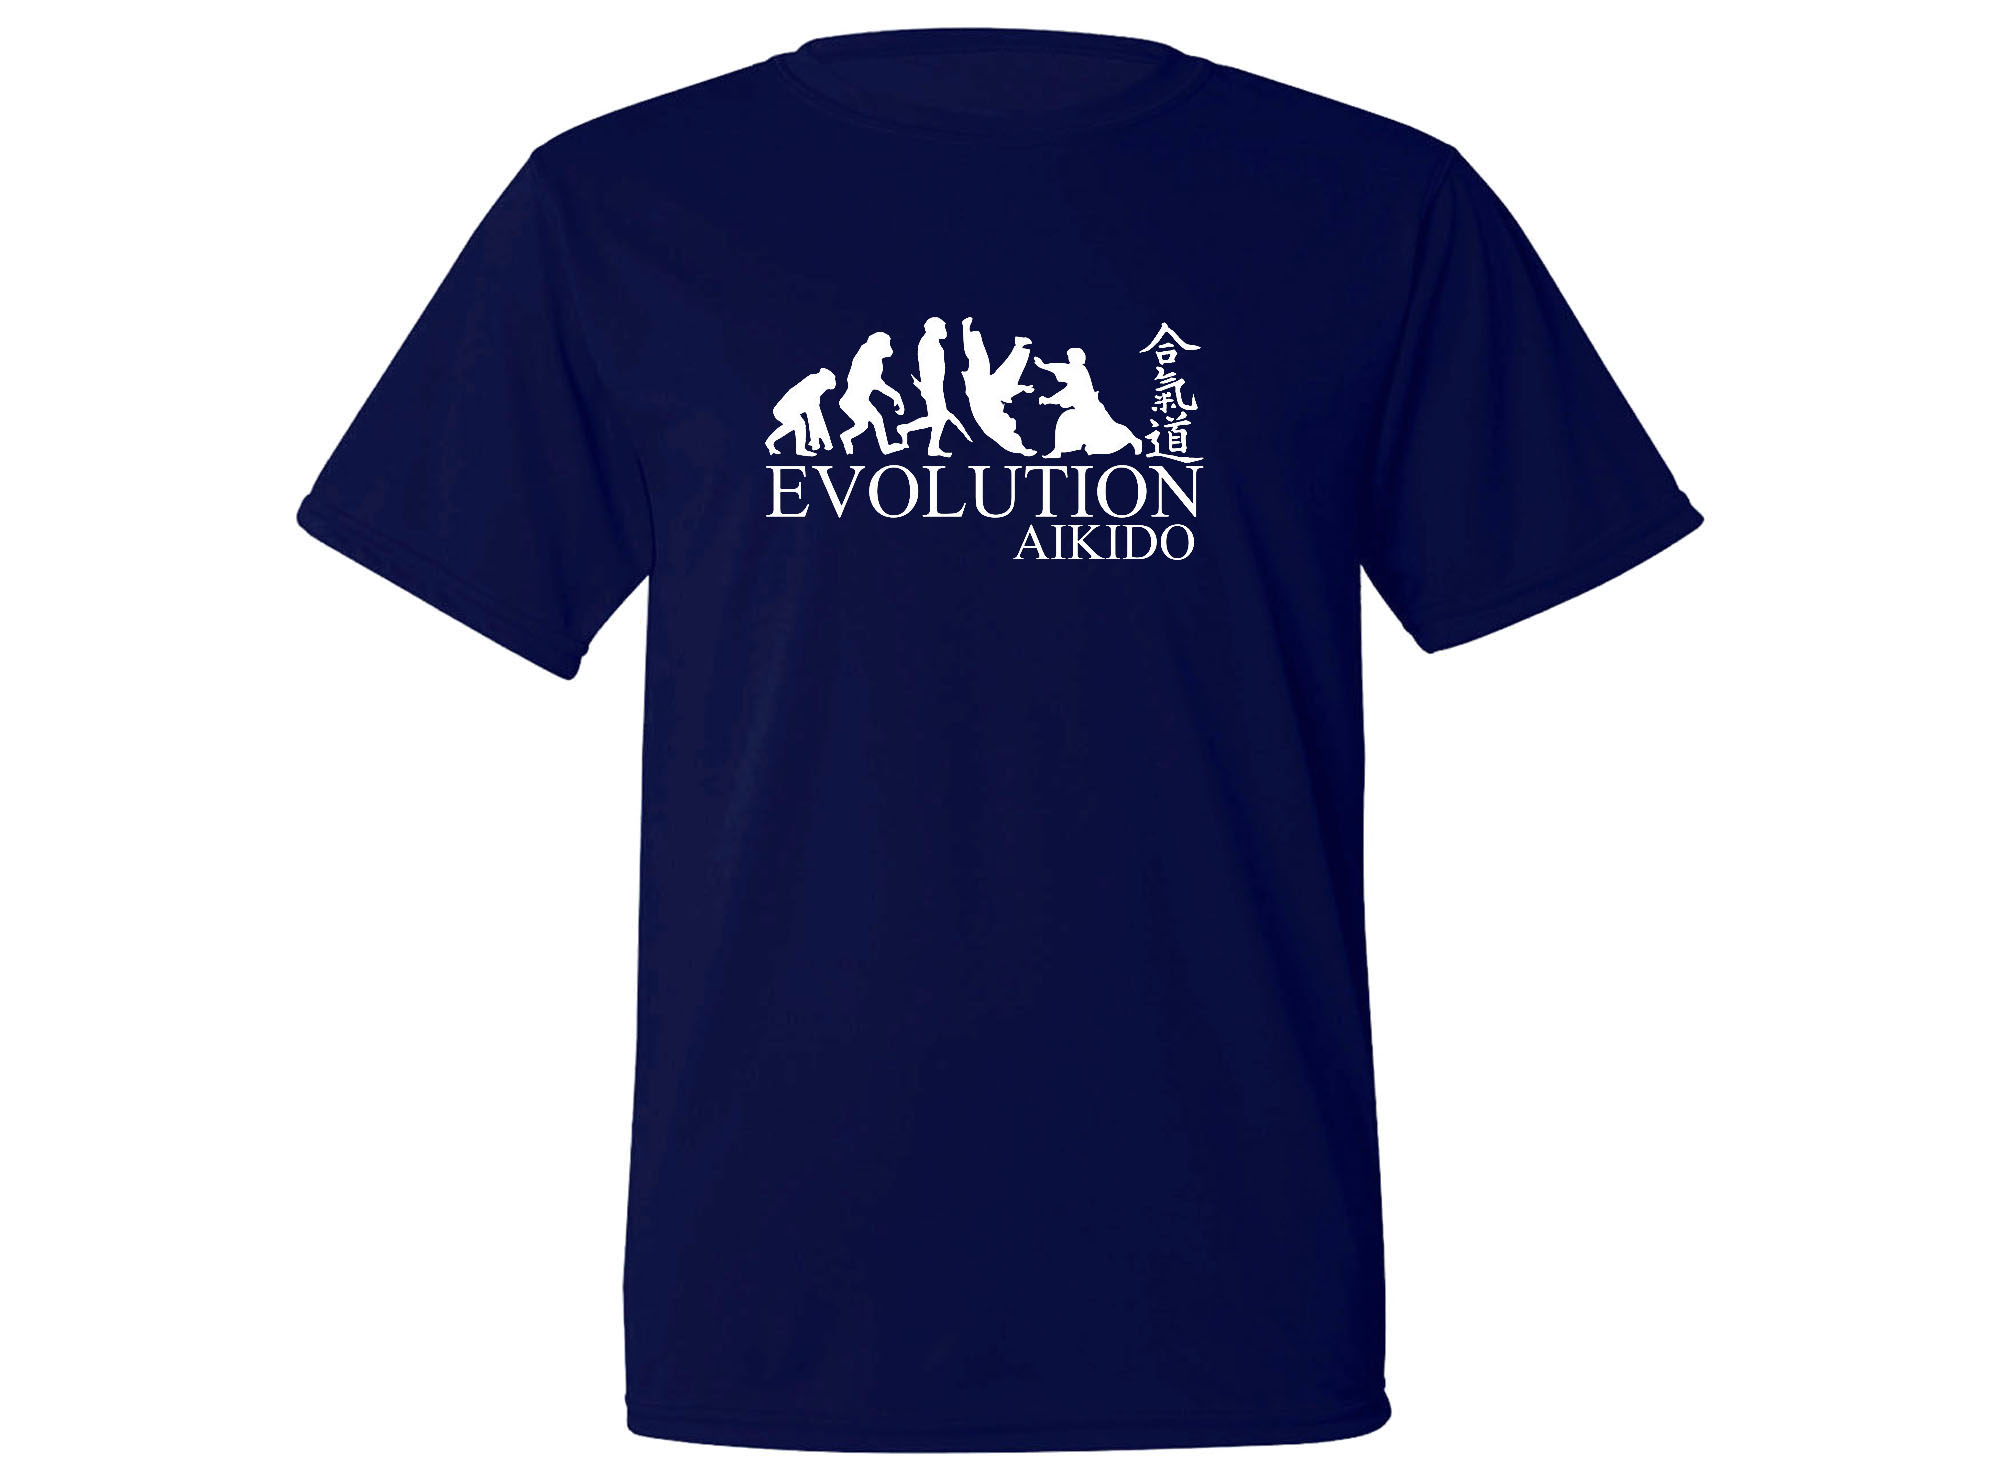 Aikido evolution sweat proof fabric navy blue t-shirt